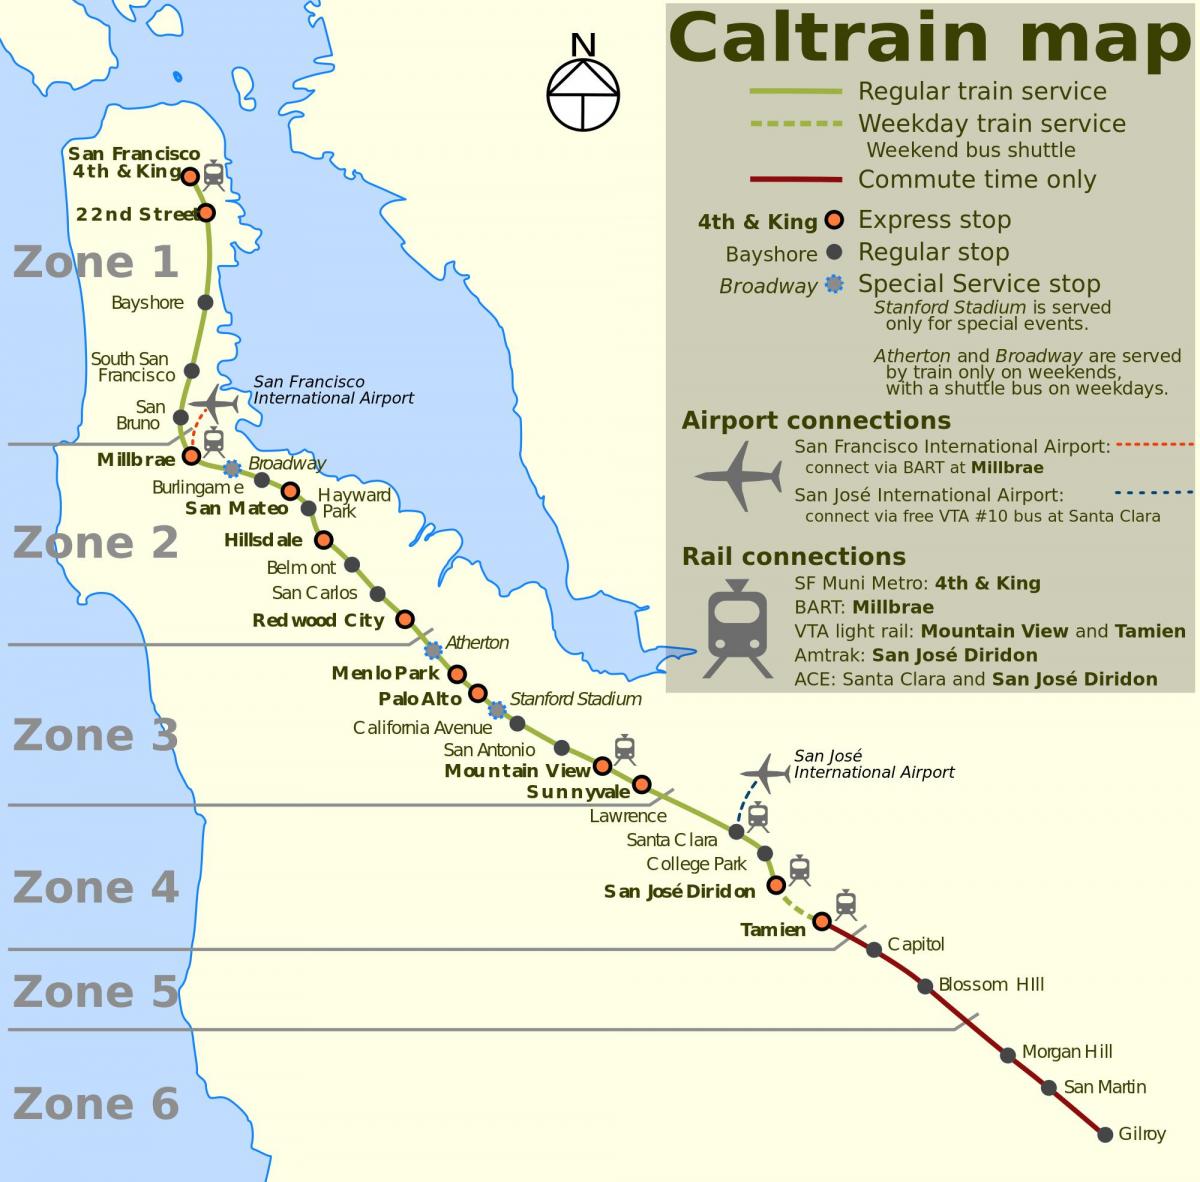 San Francisco caltrain map